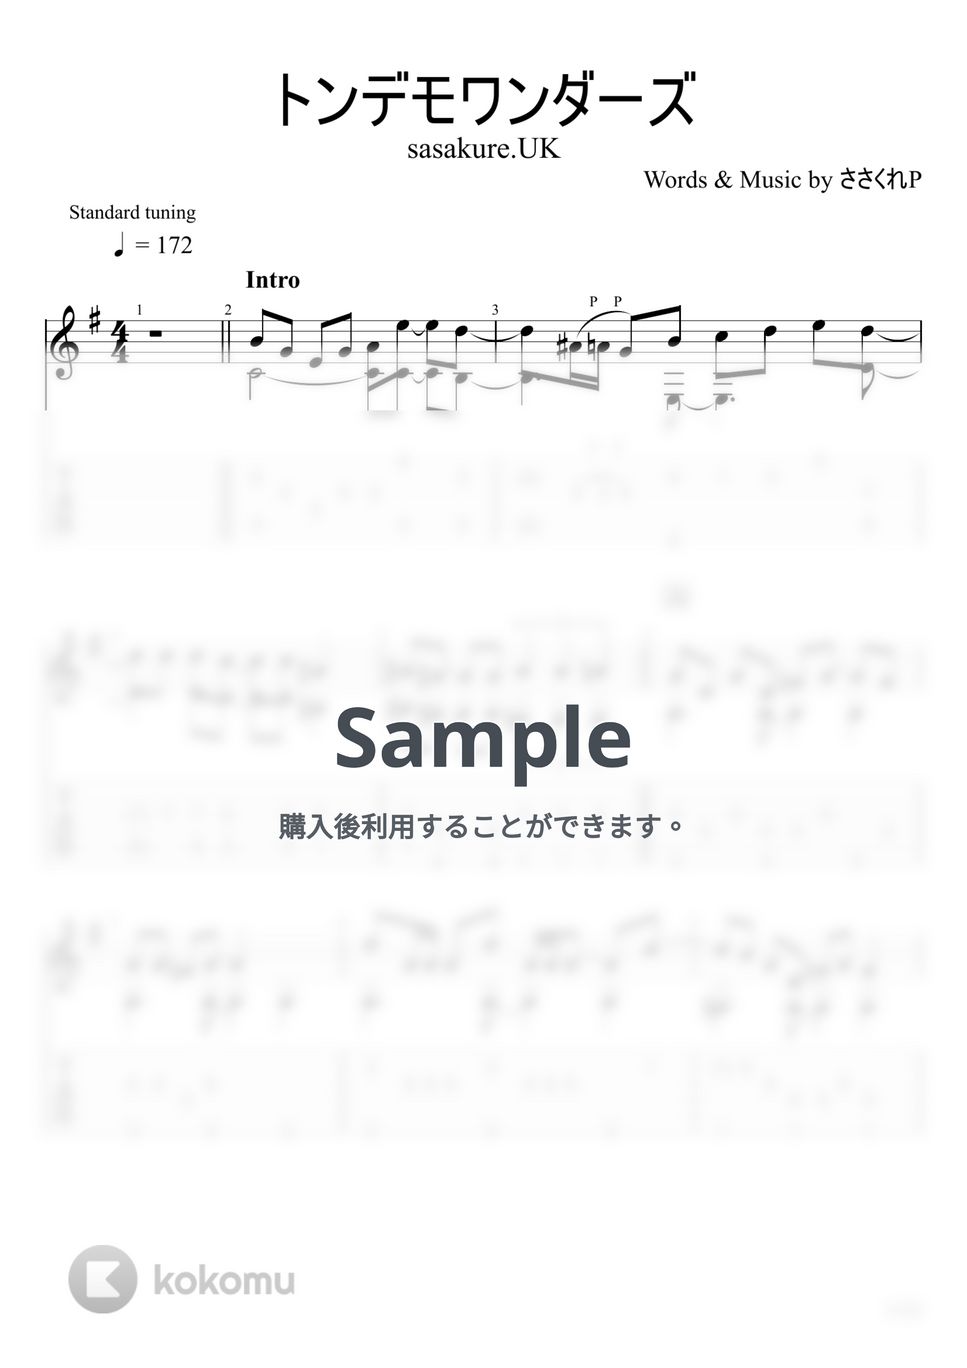 sasakure.UK - トンデモワンダーズ (ソロギター) by u3danchou